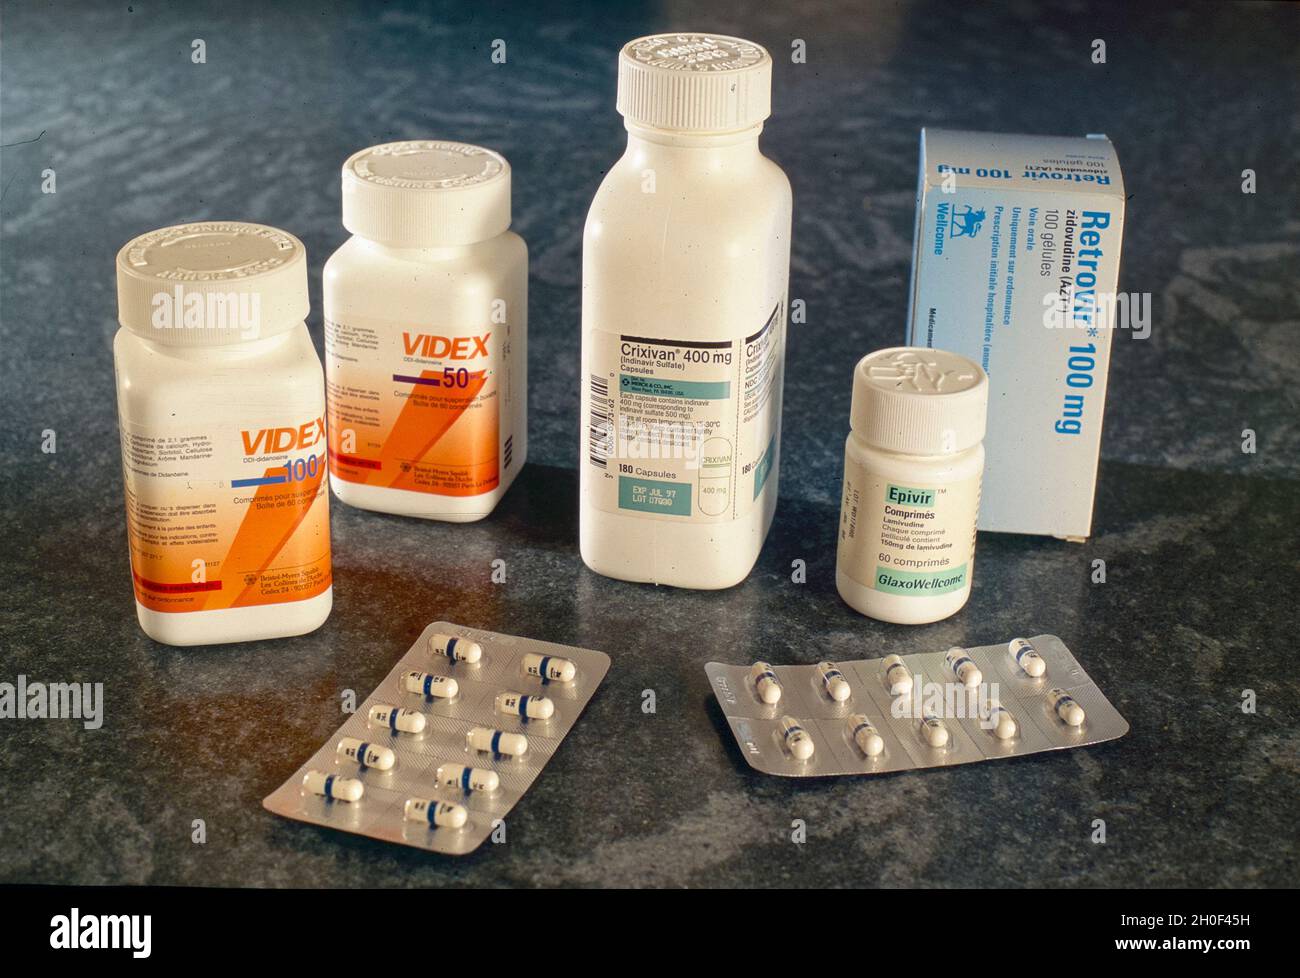 Anti hiv medikamente -Fotos und -Bildmaterial in hoher Auflösung – Alamy